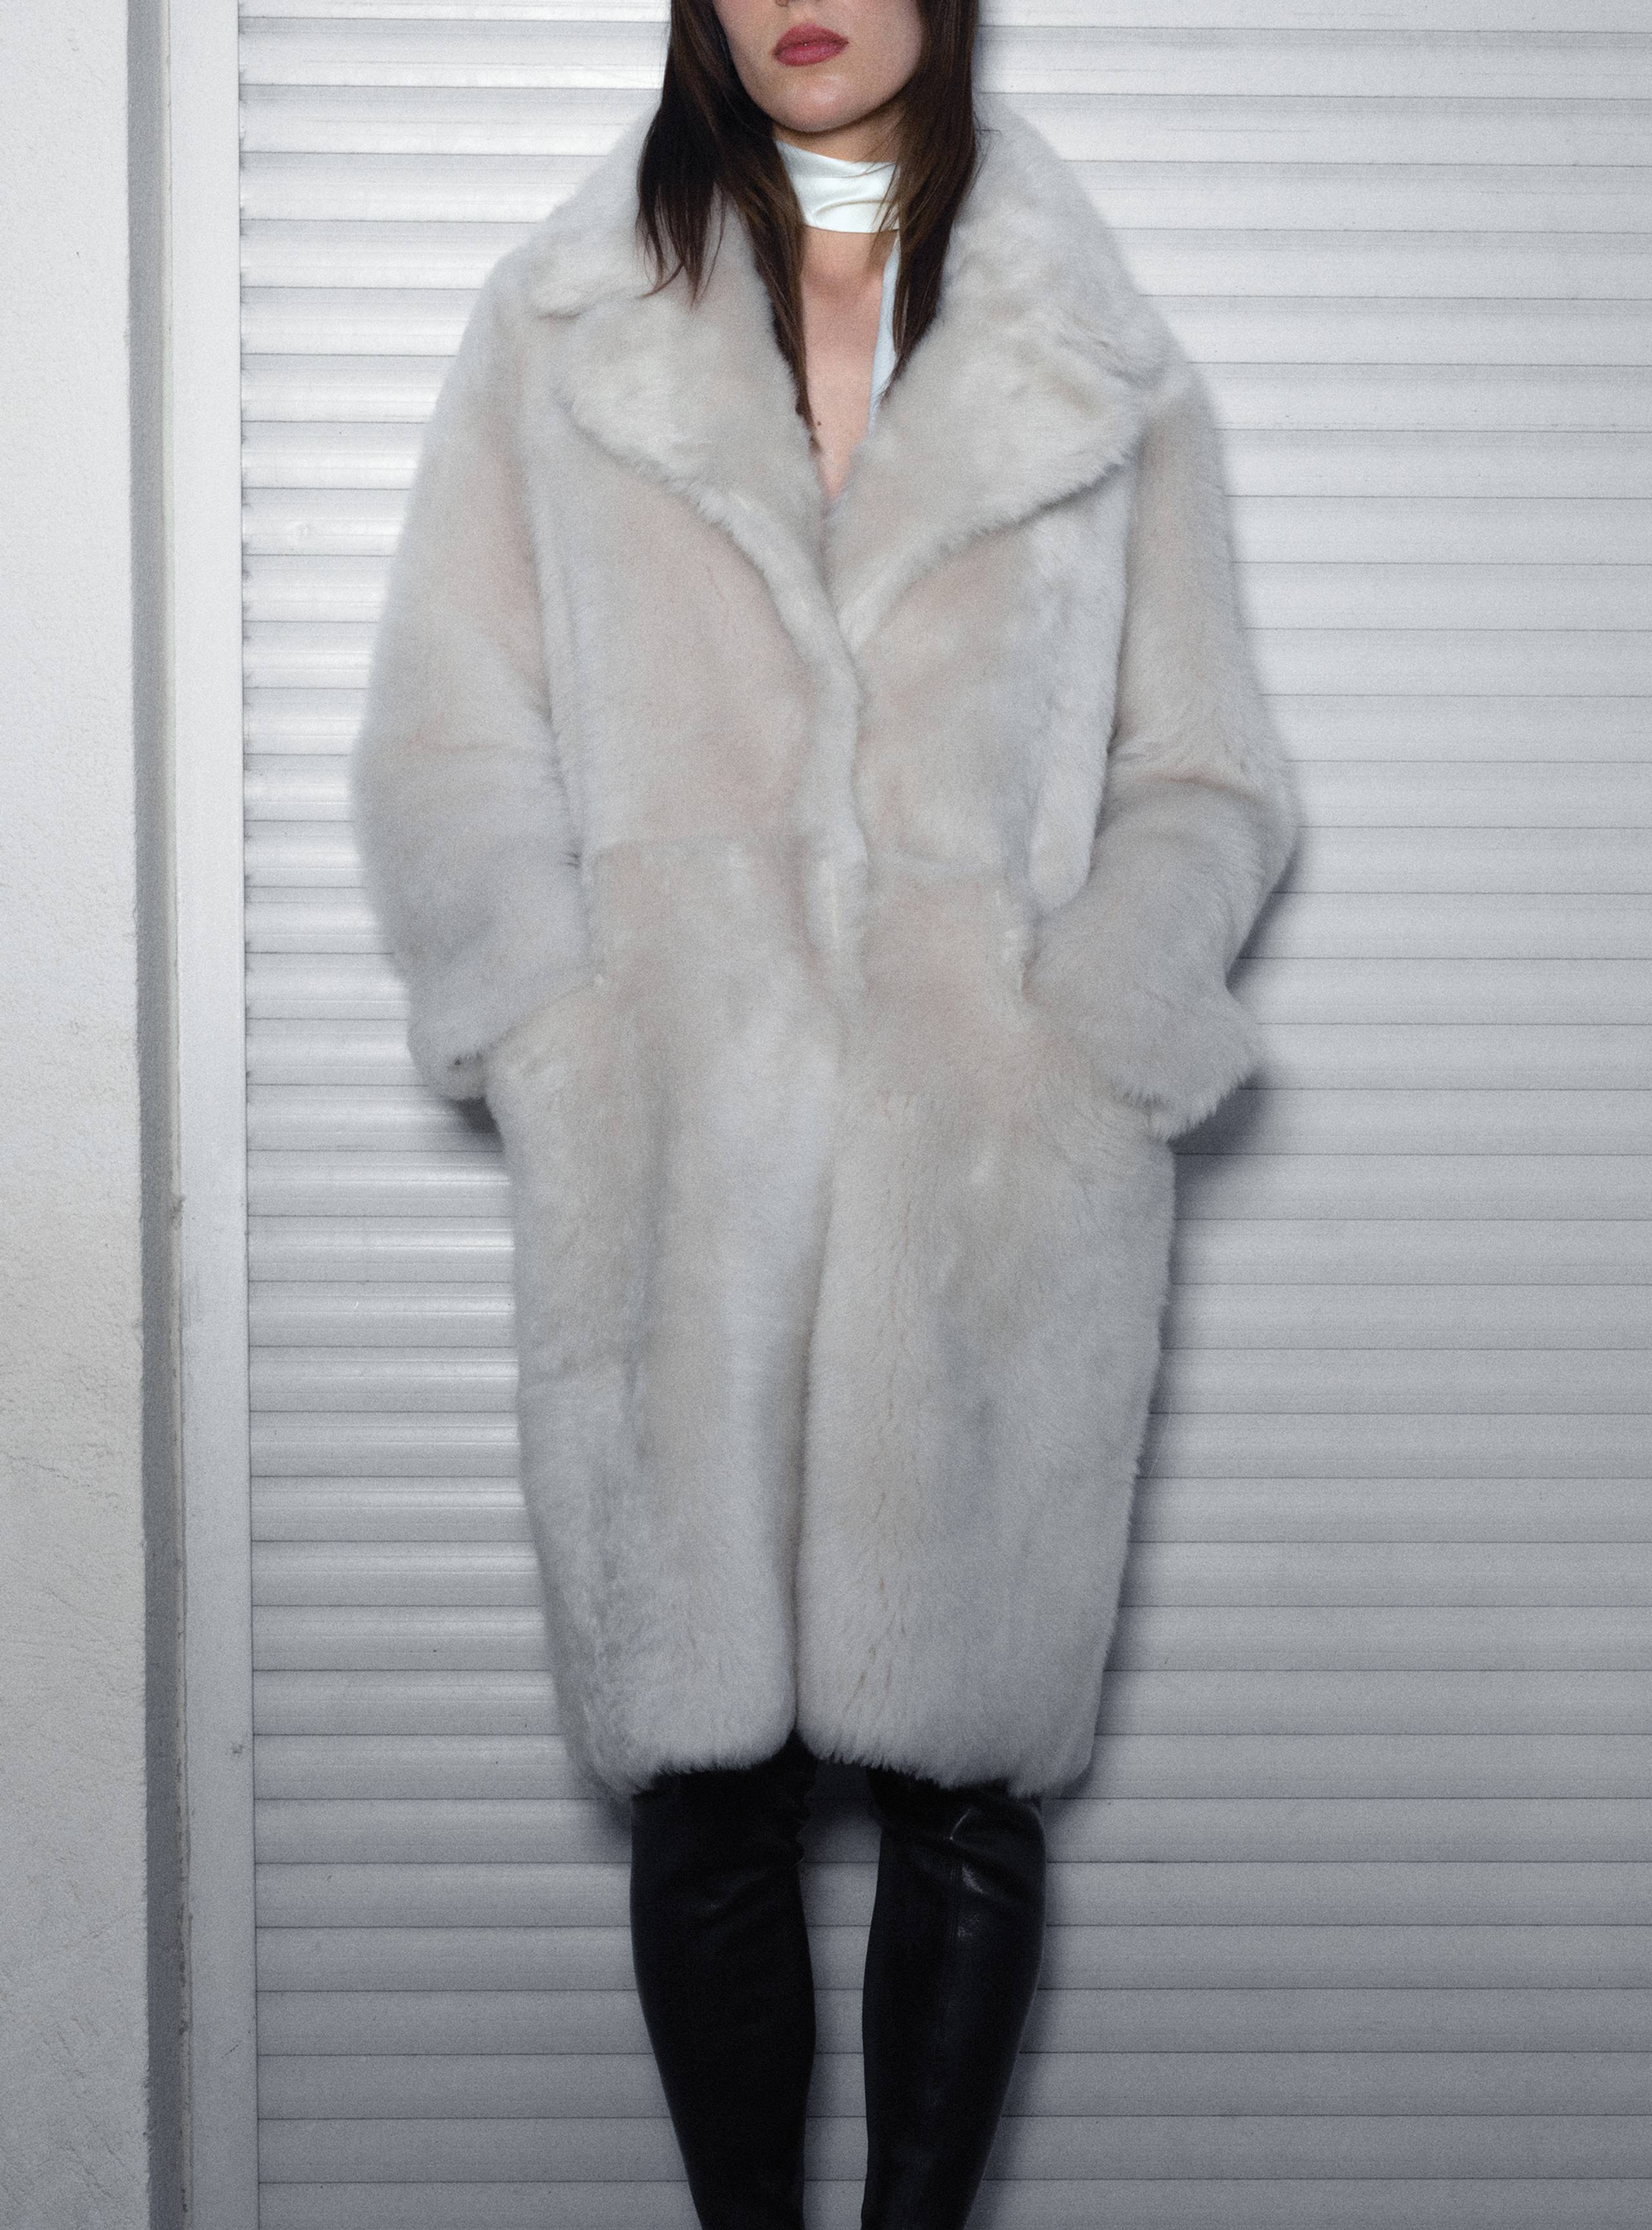 A model standing wearing the Evit Ivory apres ski shearling coat